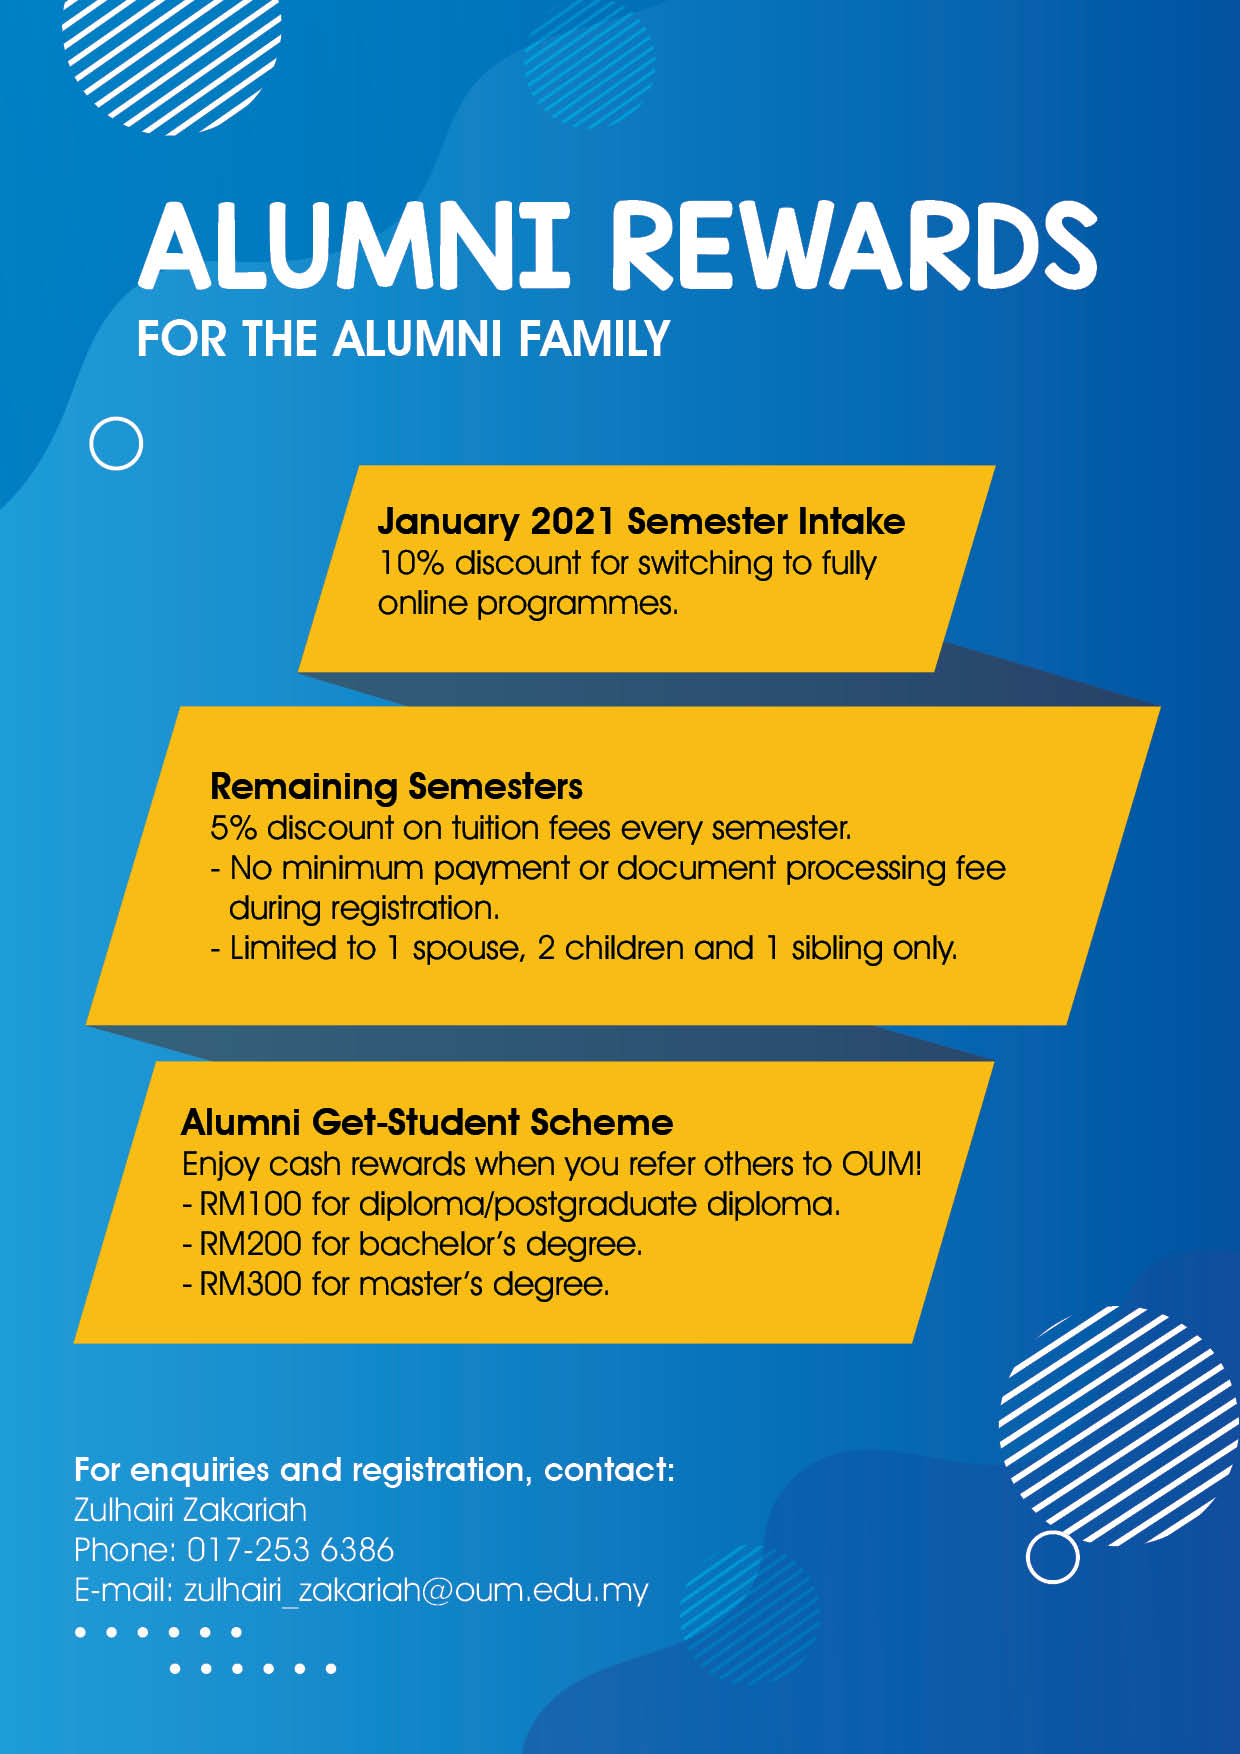 alumni rewards